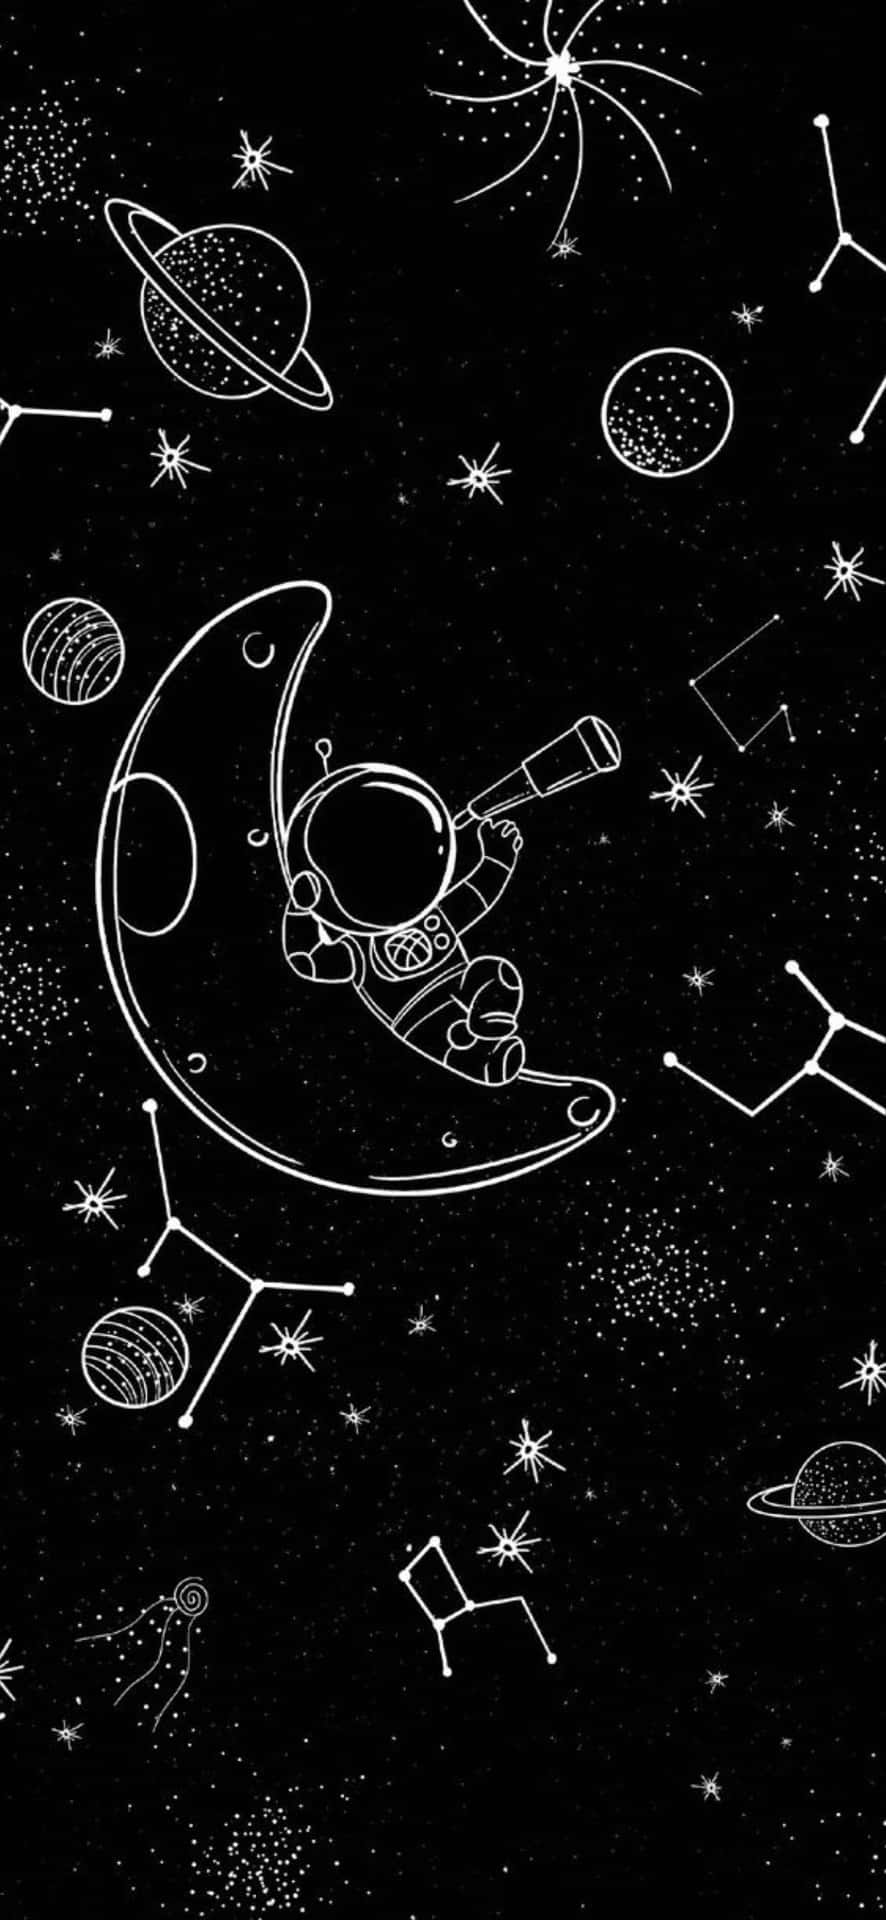 Astronautand Cosmic Elements Illustration Wallpaper